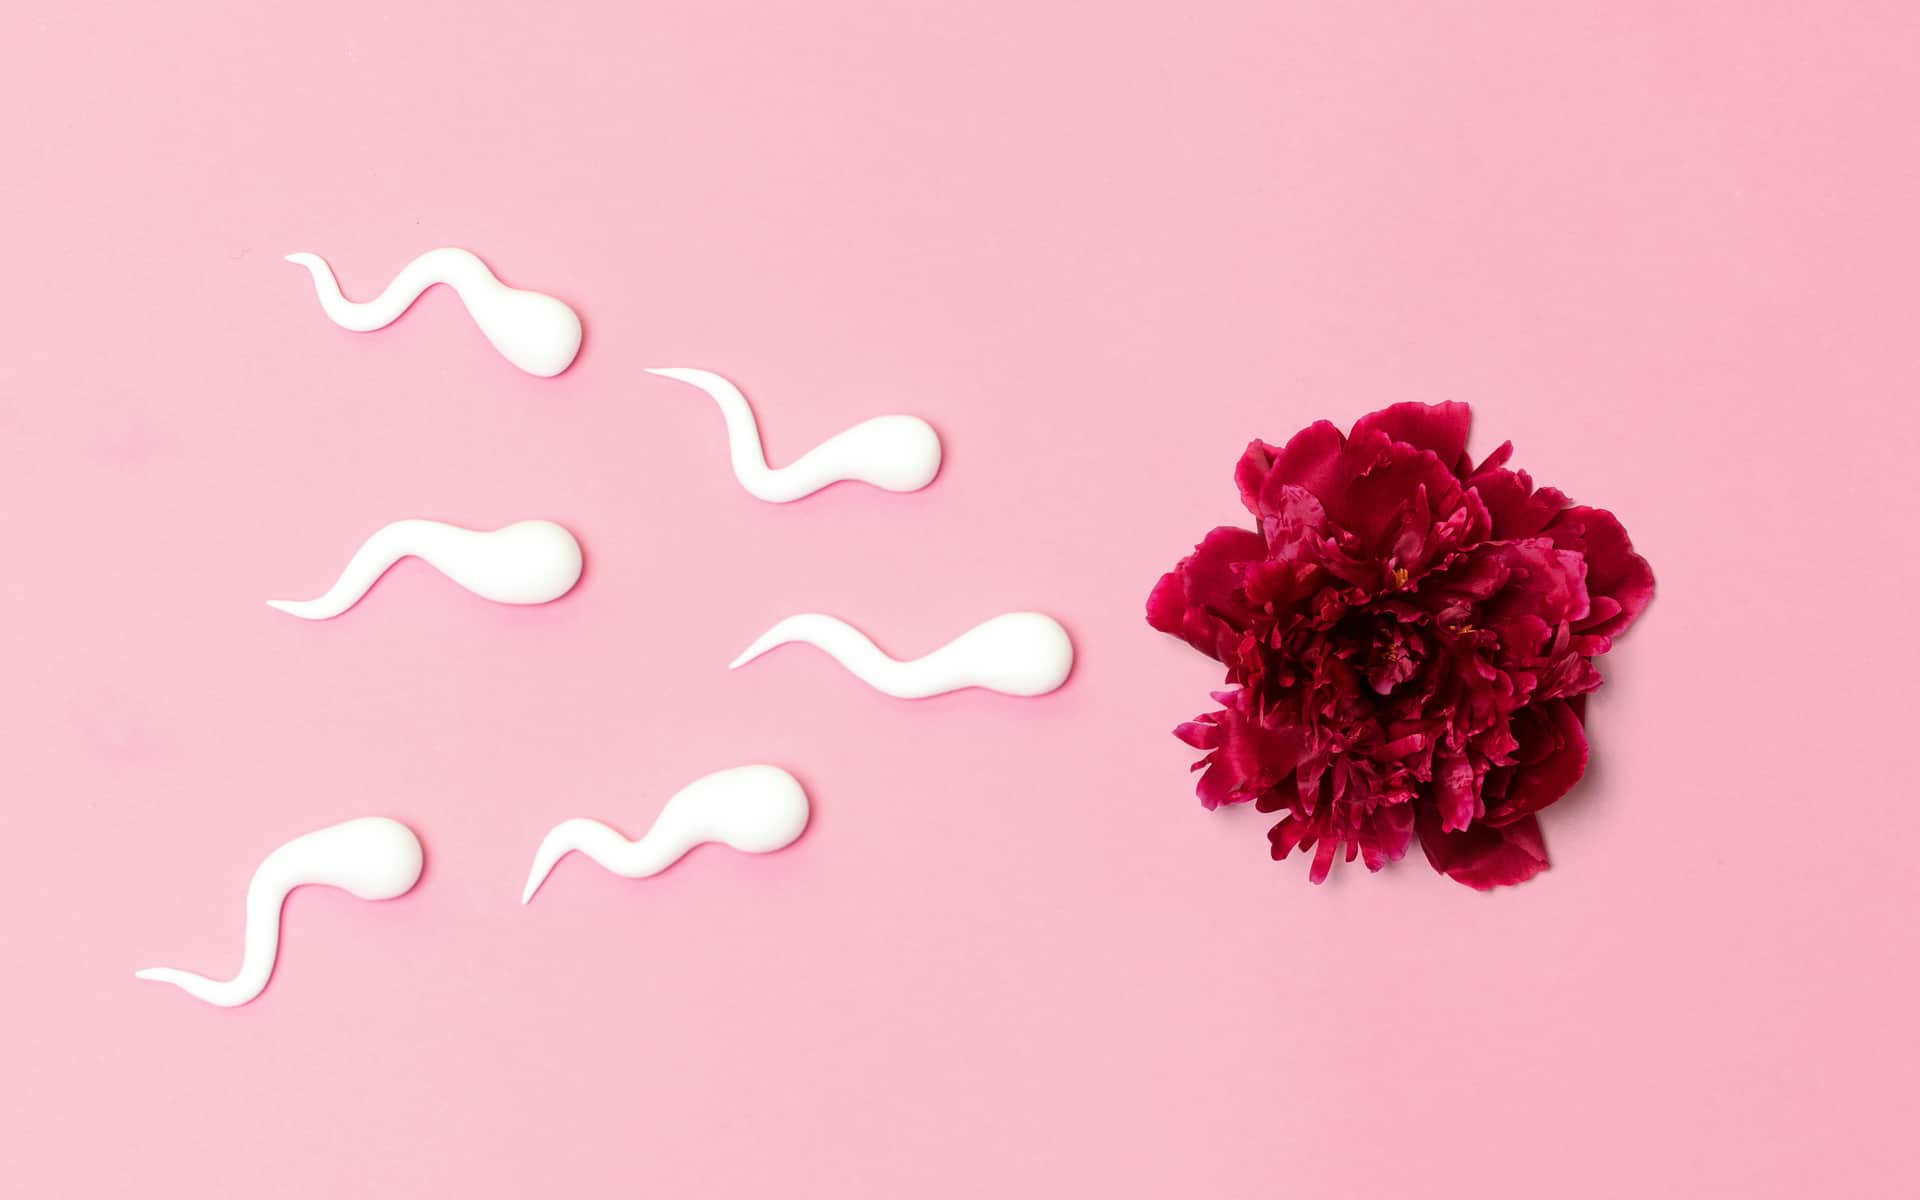 Fertilización in vitro. Concepto médico de inseminación artificial. Flor de peón rojo con formas de esperma plástica